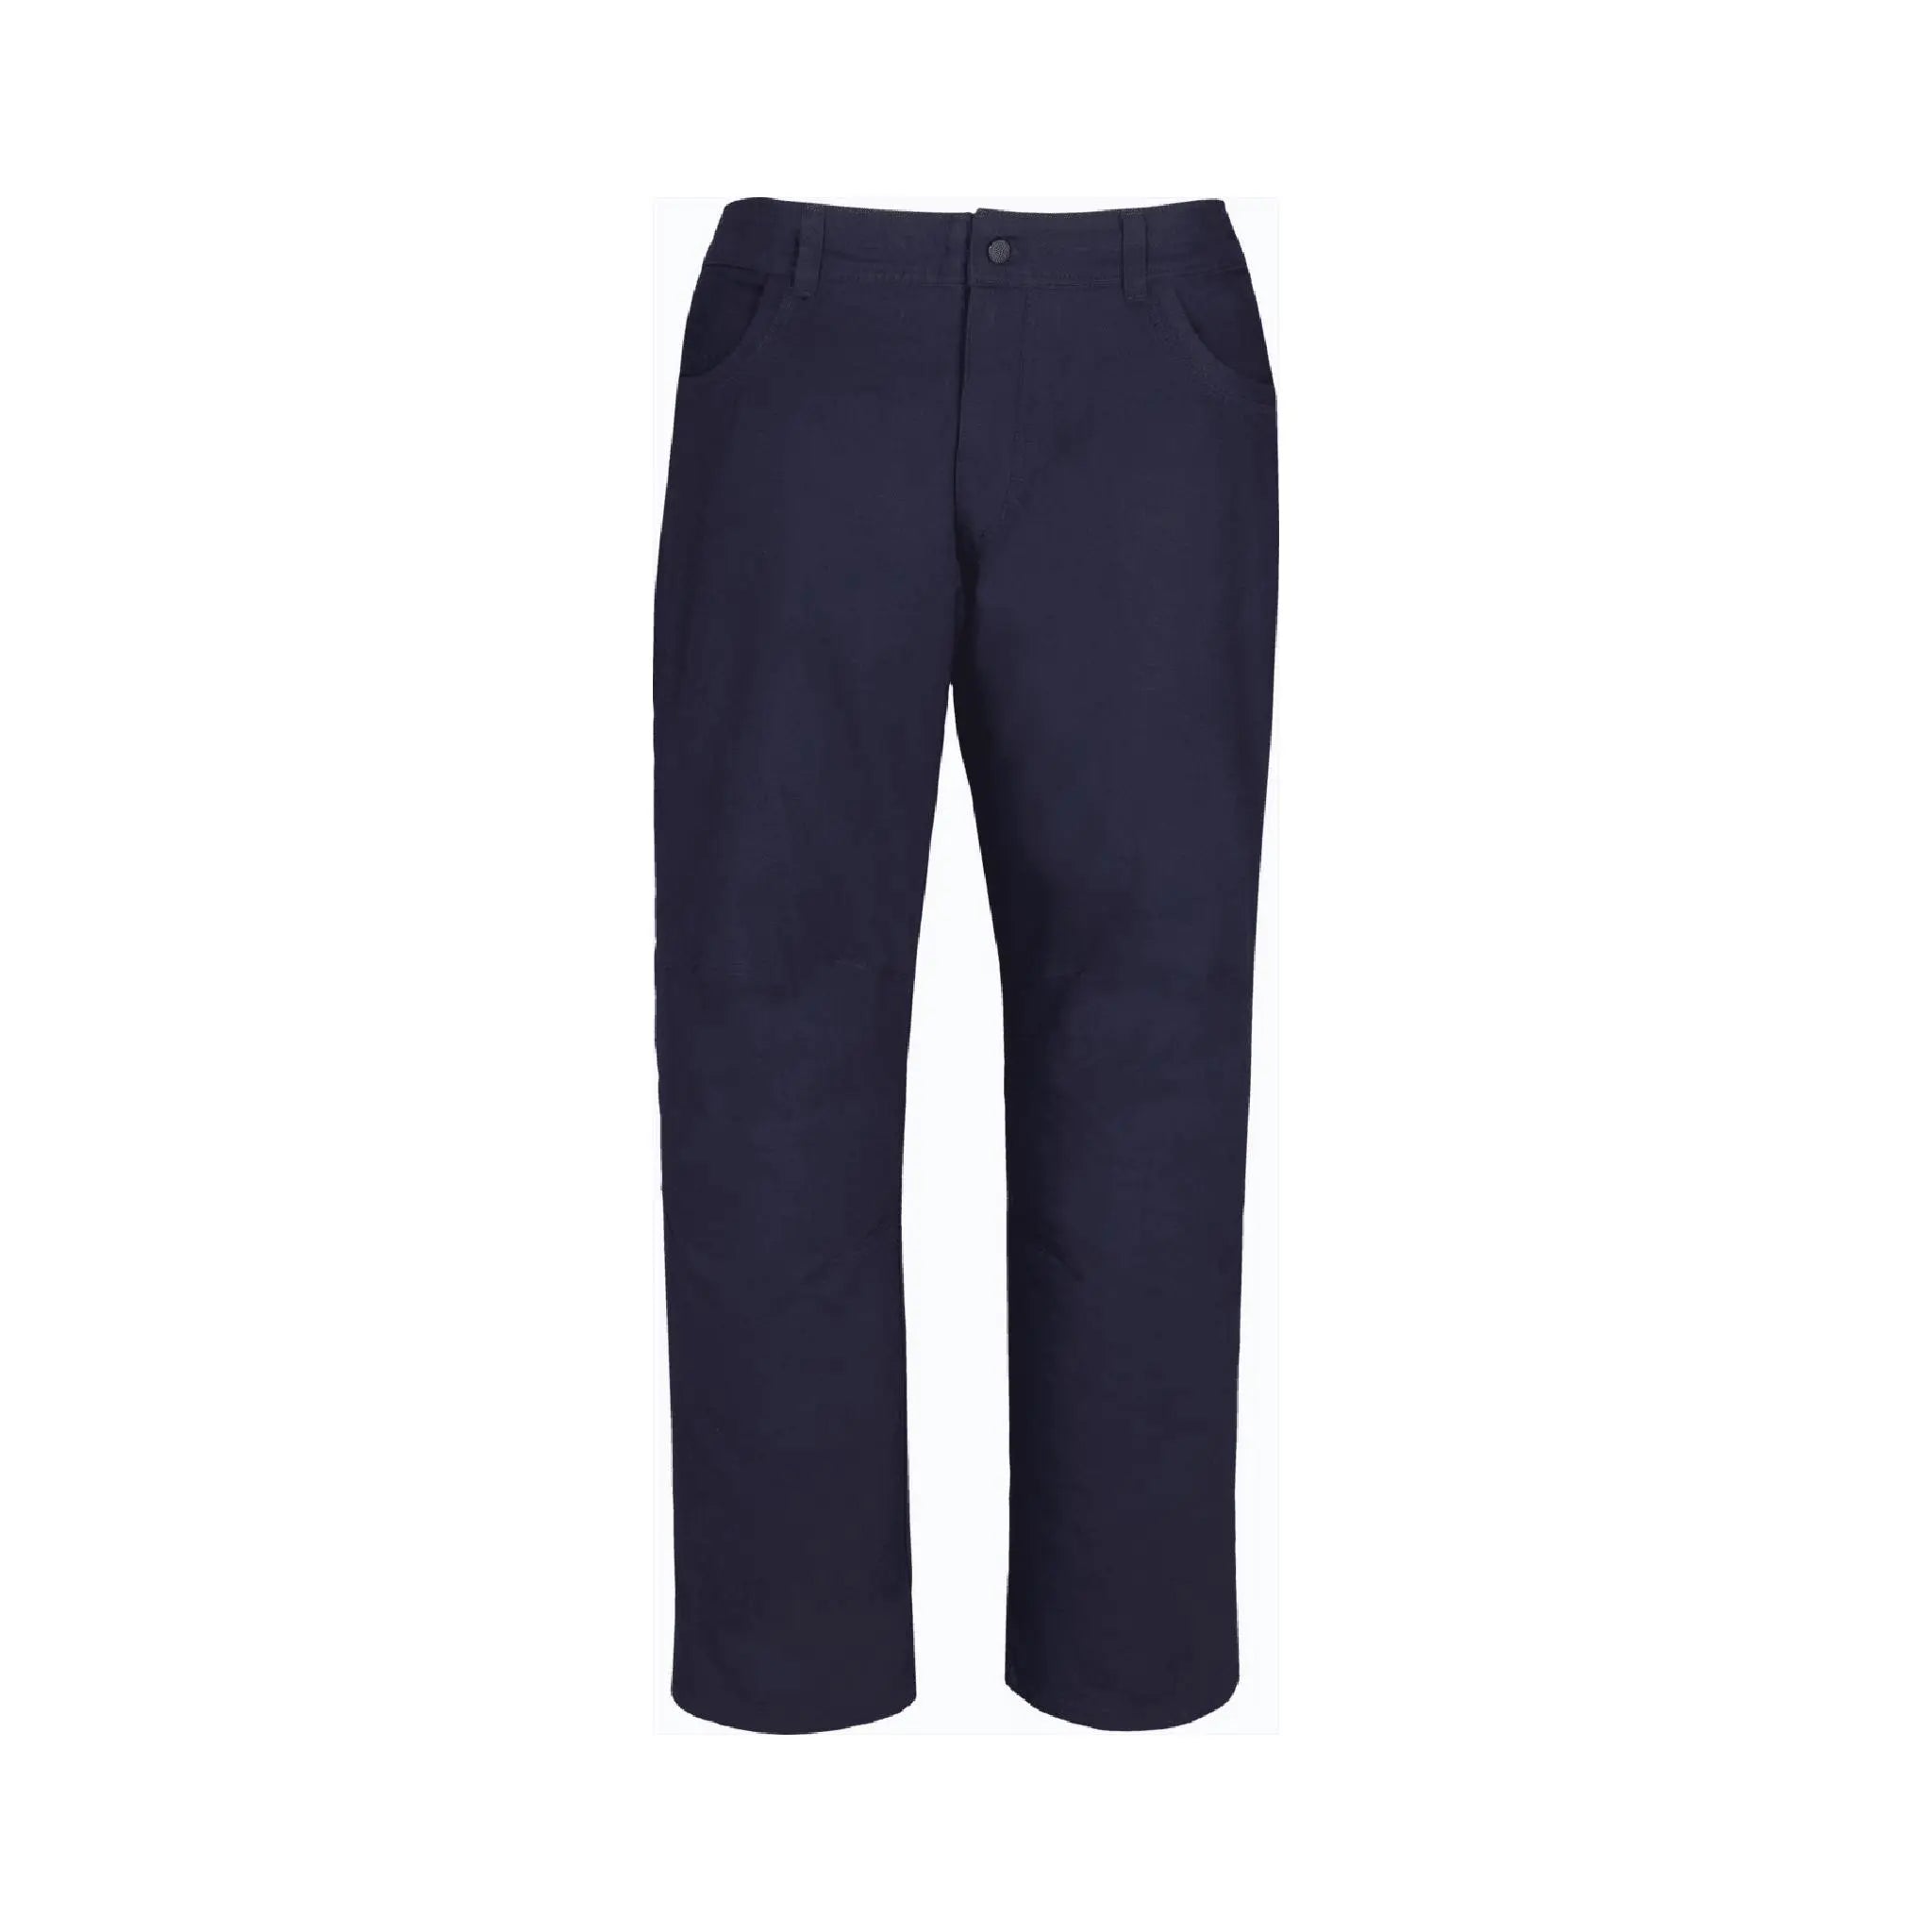 LAKELAND FR - Men's/Women's FR Light Weight Pants, Navy Blue